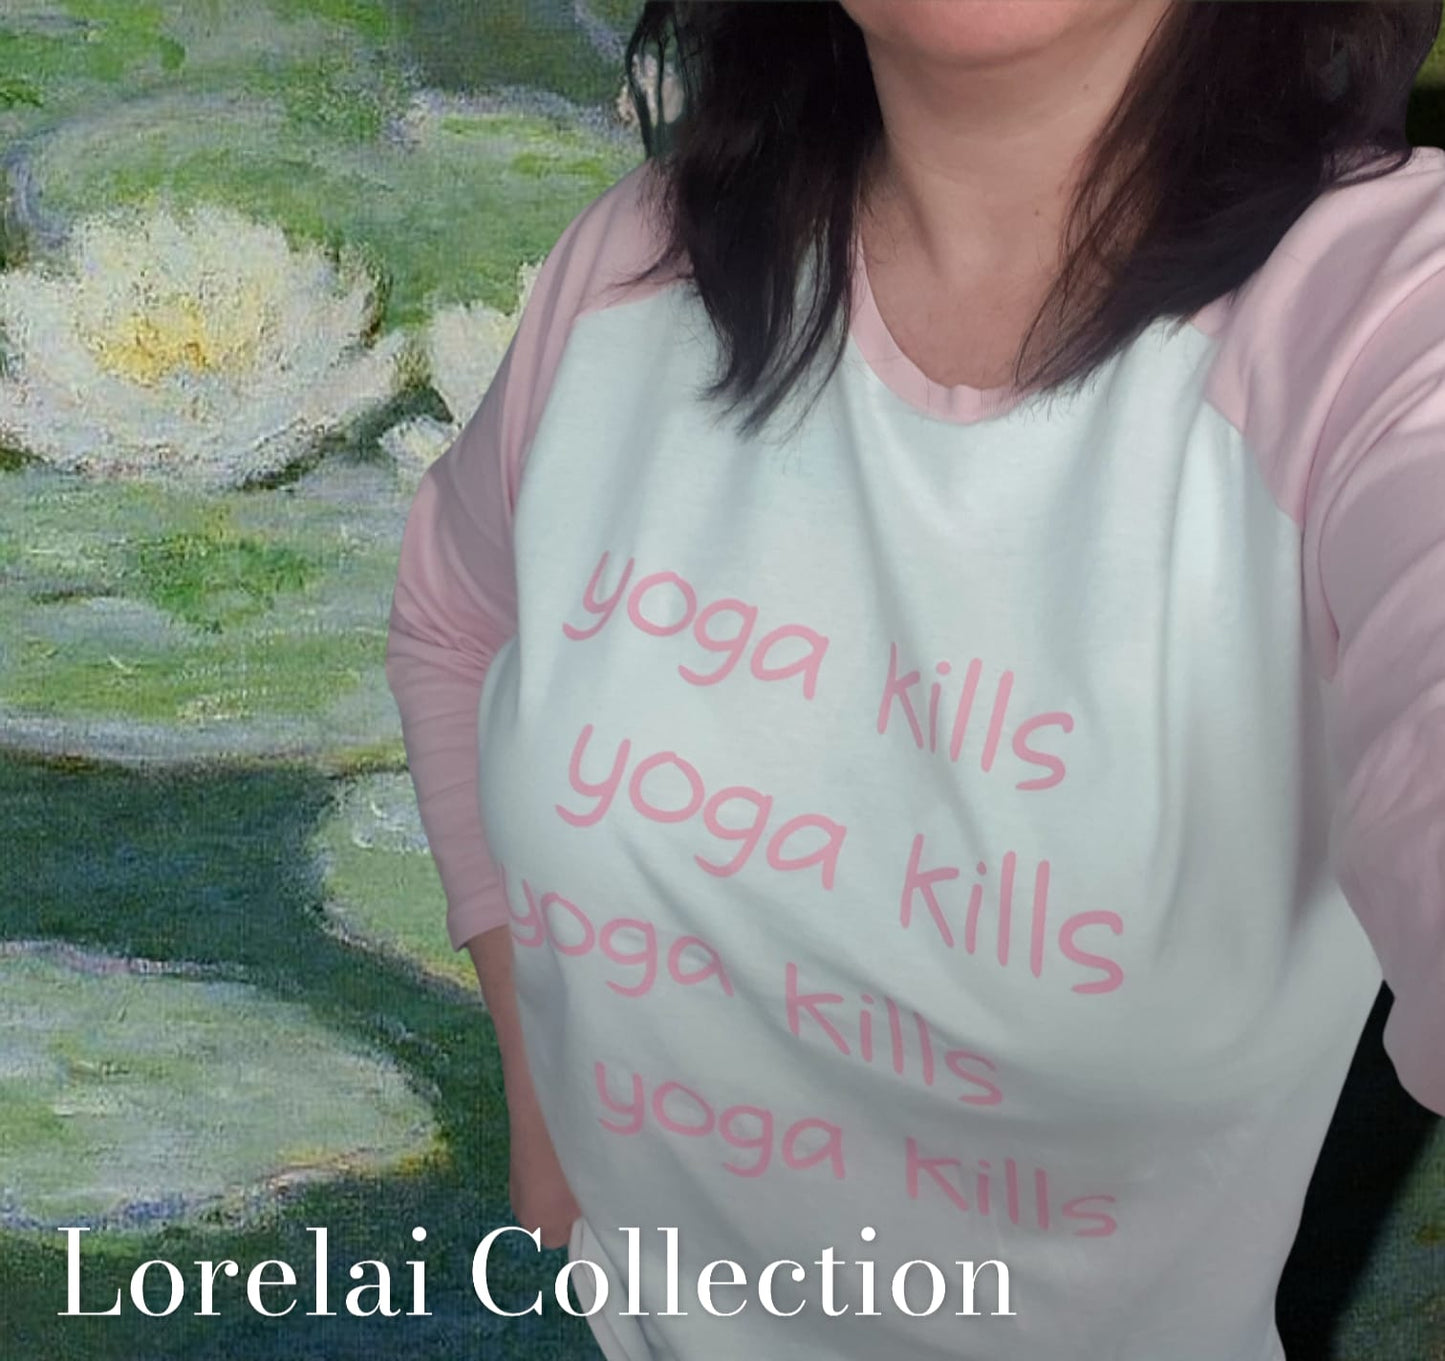 Unisex Superstar Baseball T-Shirt im Lorelai Gilmore Girls Style Yoga kills